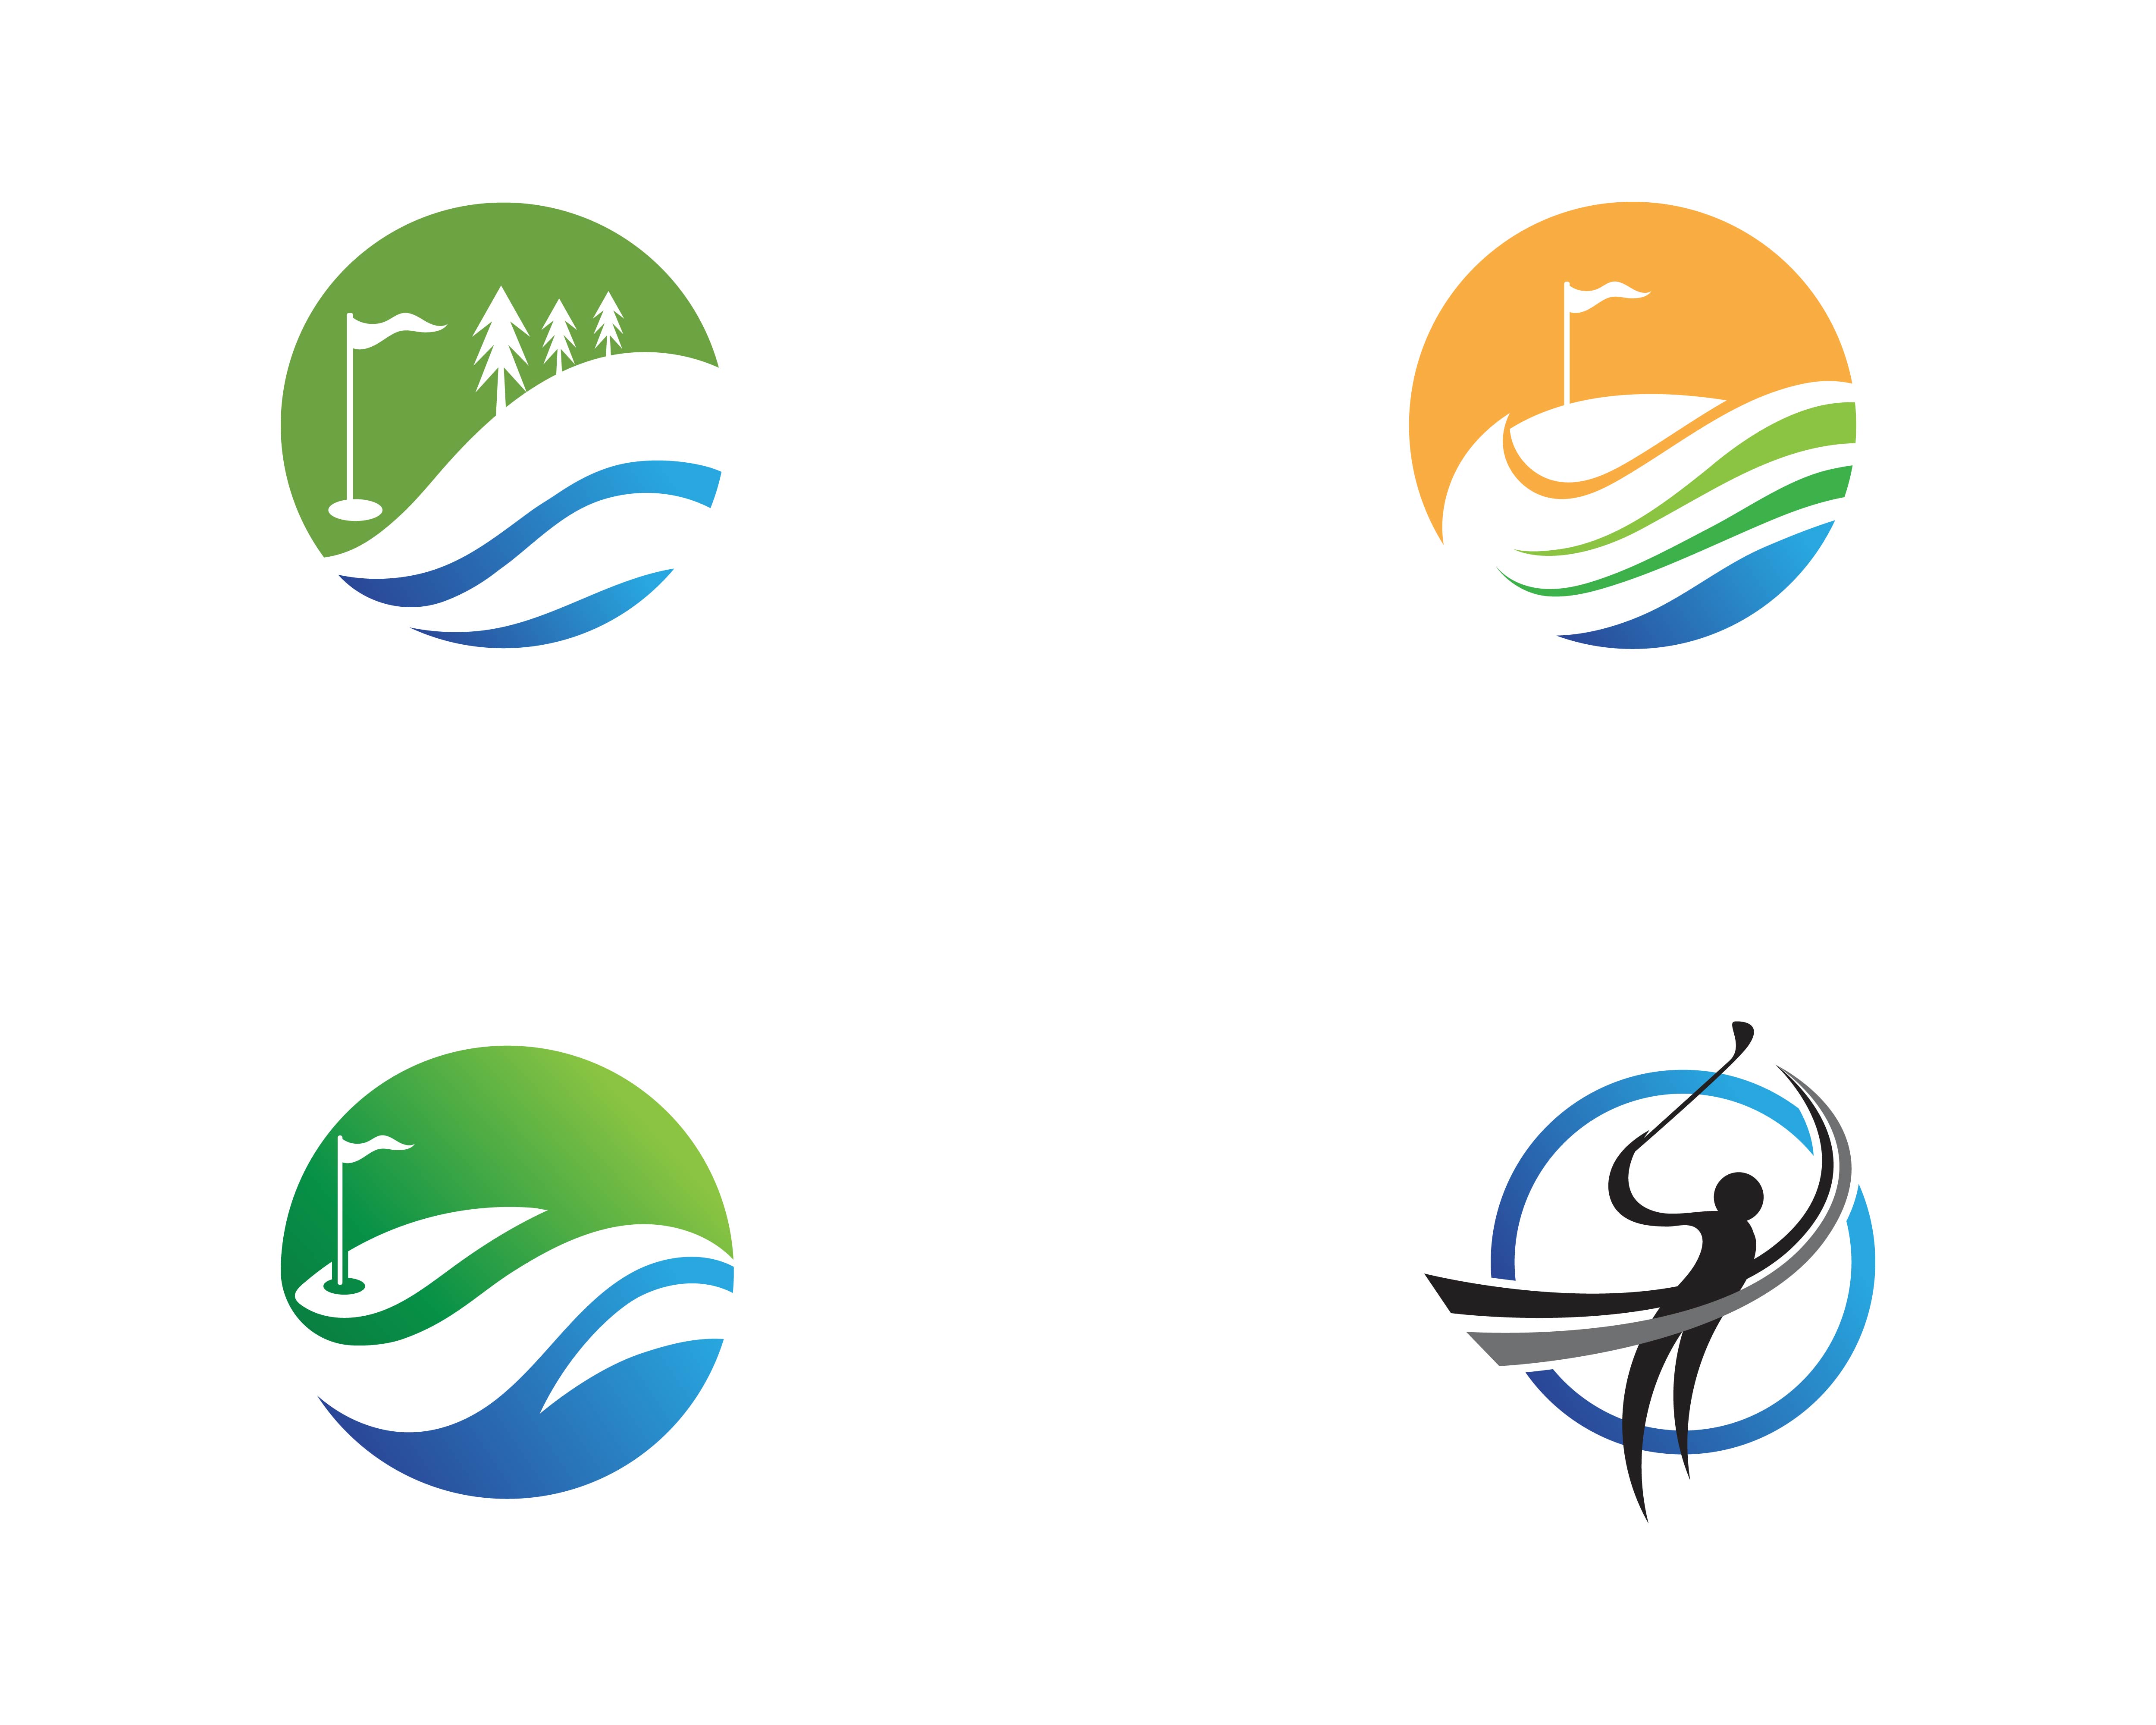 Download Golf club icons symbols elements and logo vector images 579127 - Download Free Vectors, Clipart ...